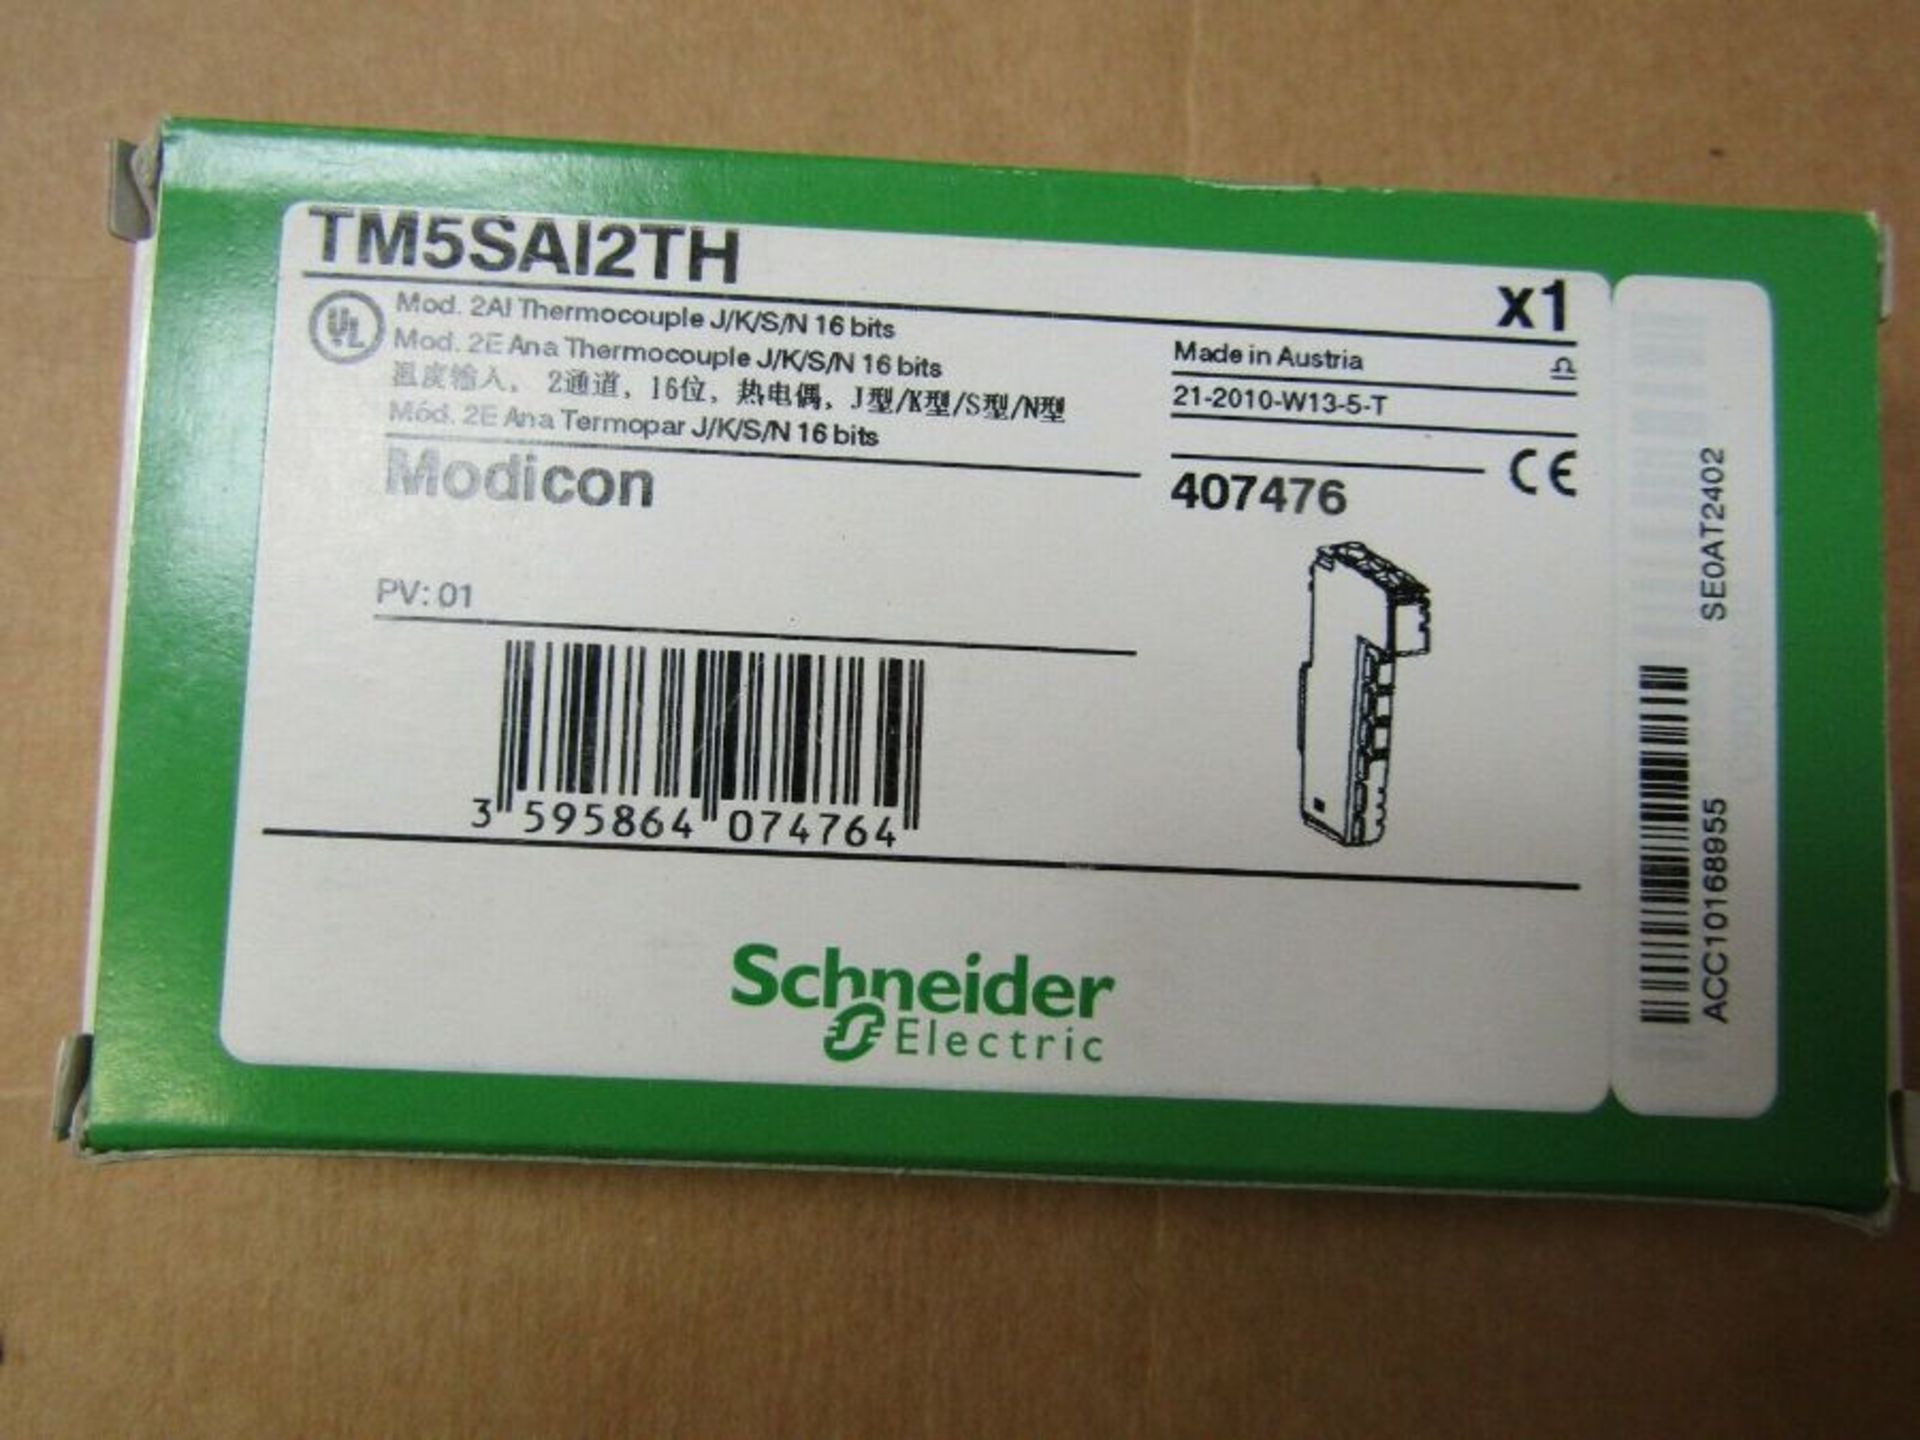 Schneider Modicon TM5 PLC Analog I/O Module 2 Input 30mA Output 24Vdc S3 7702485 - Image 2 of 2